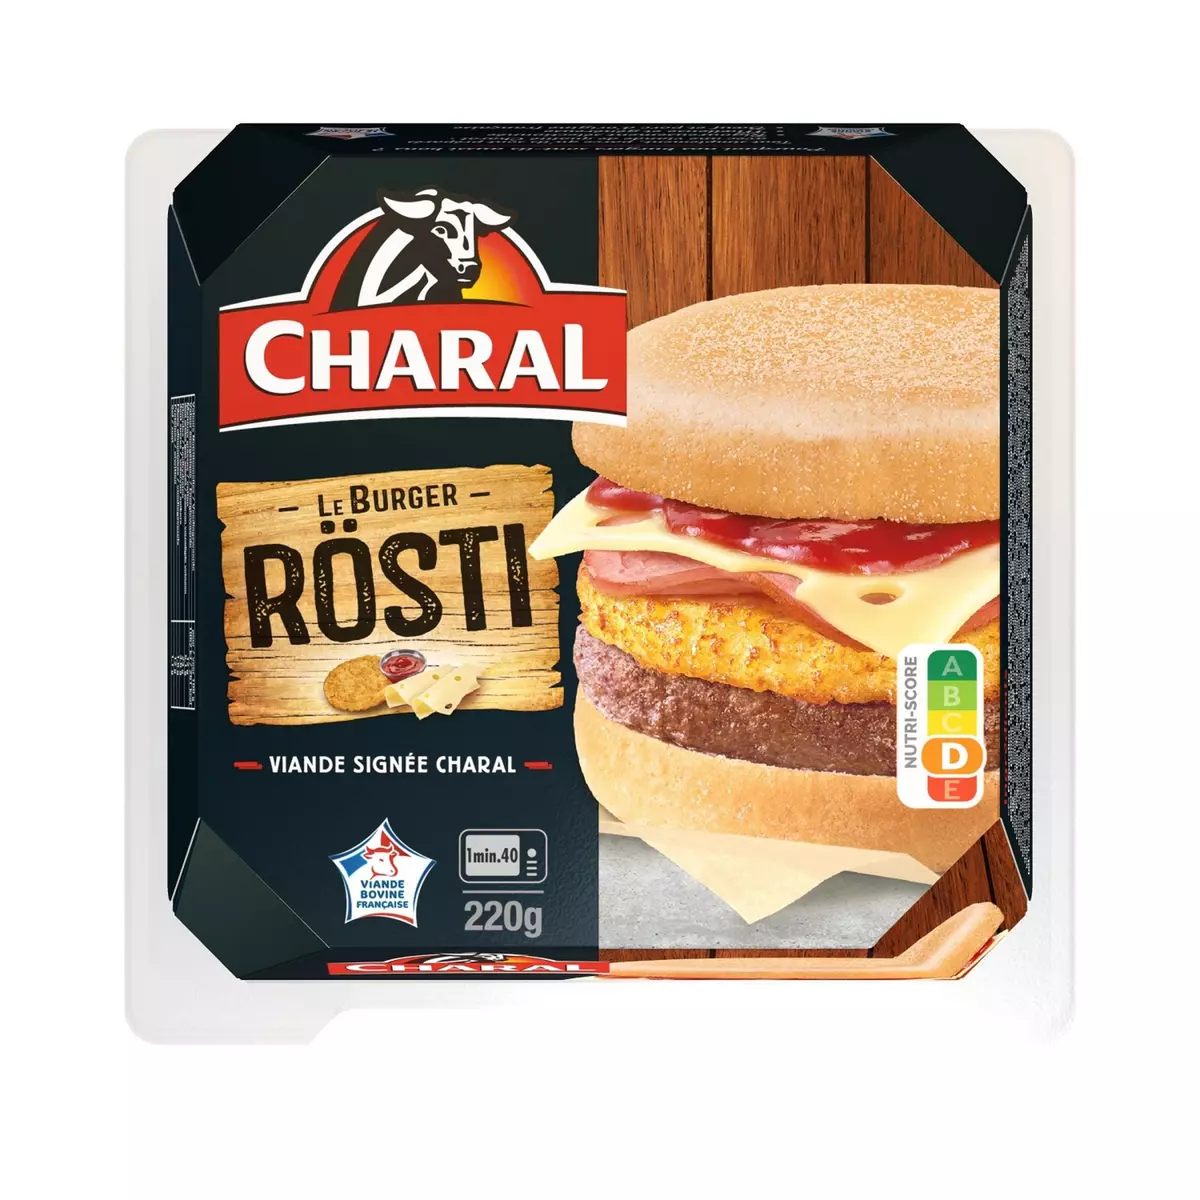 CHARAL Burger rösti 1 portion 220g